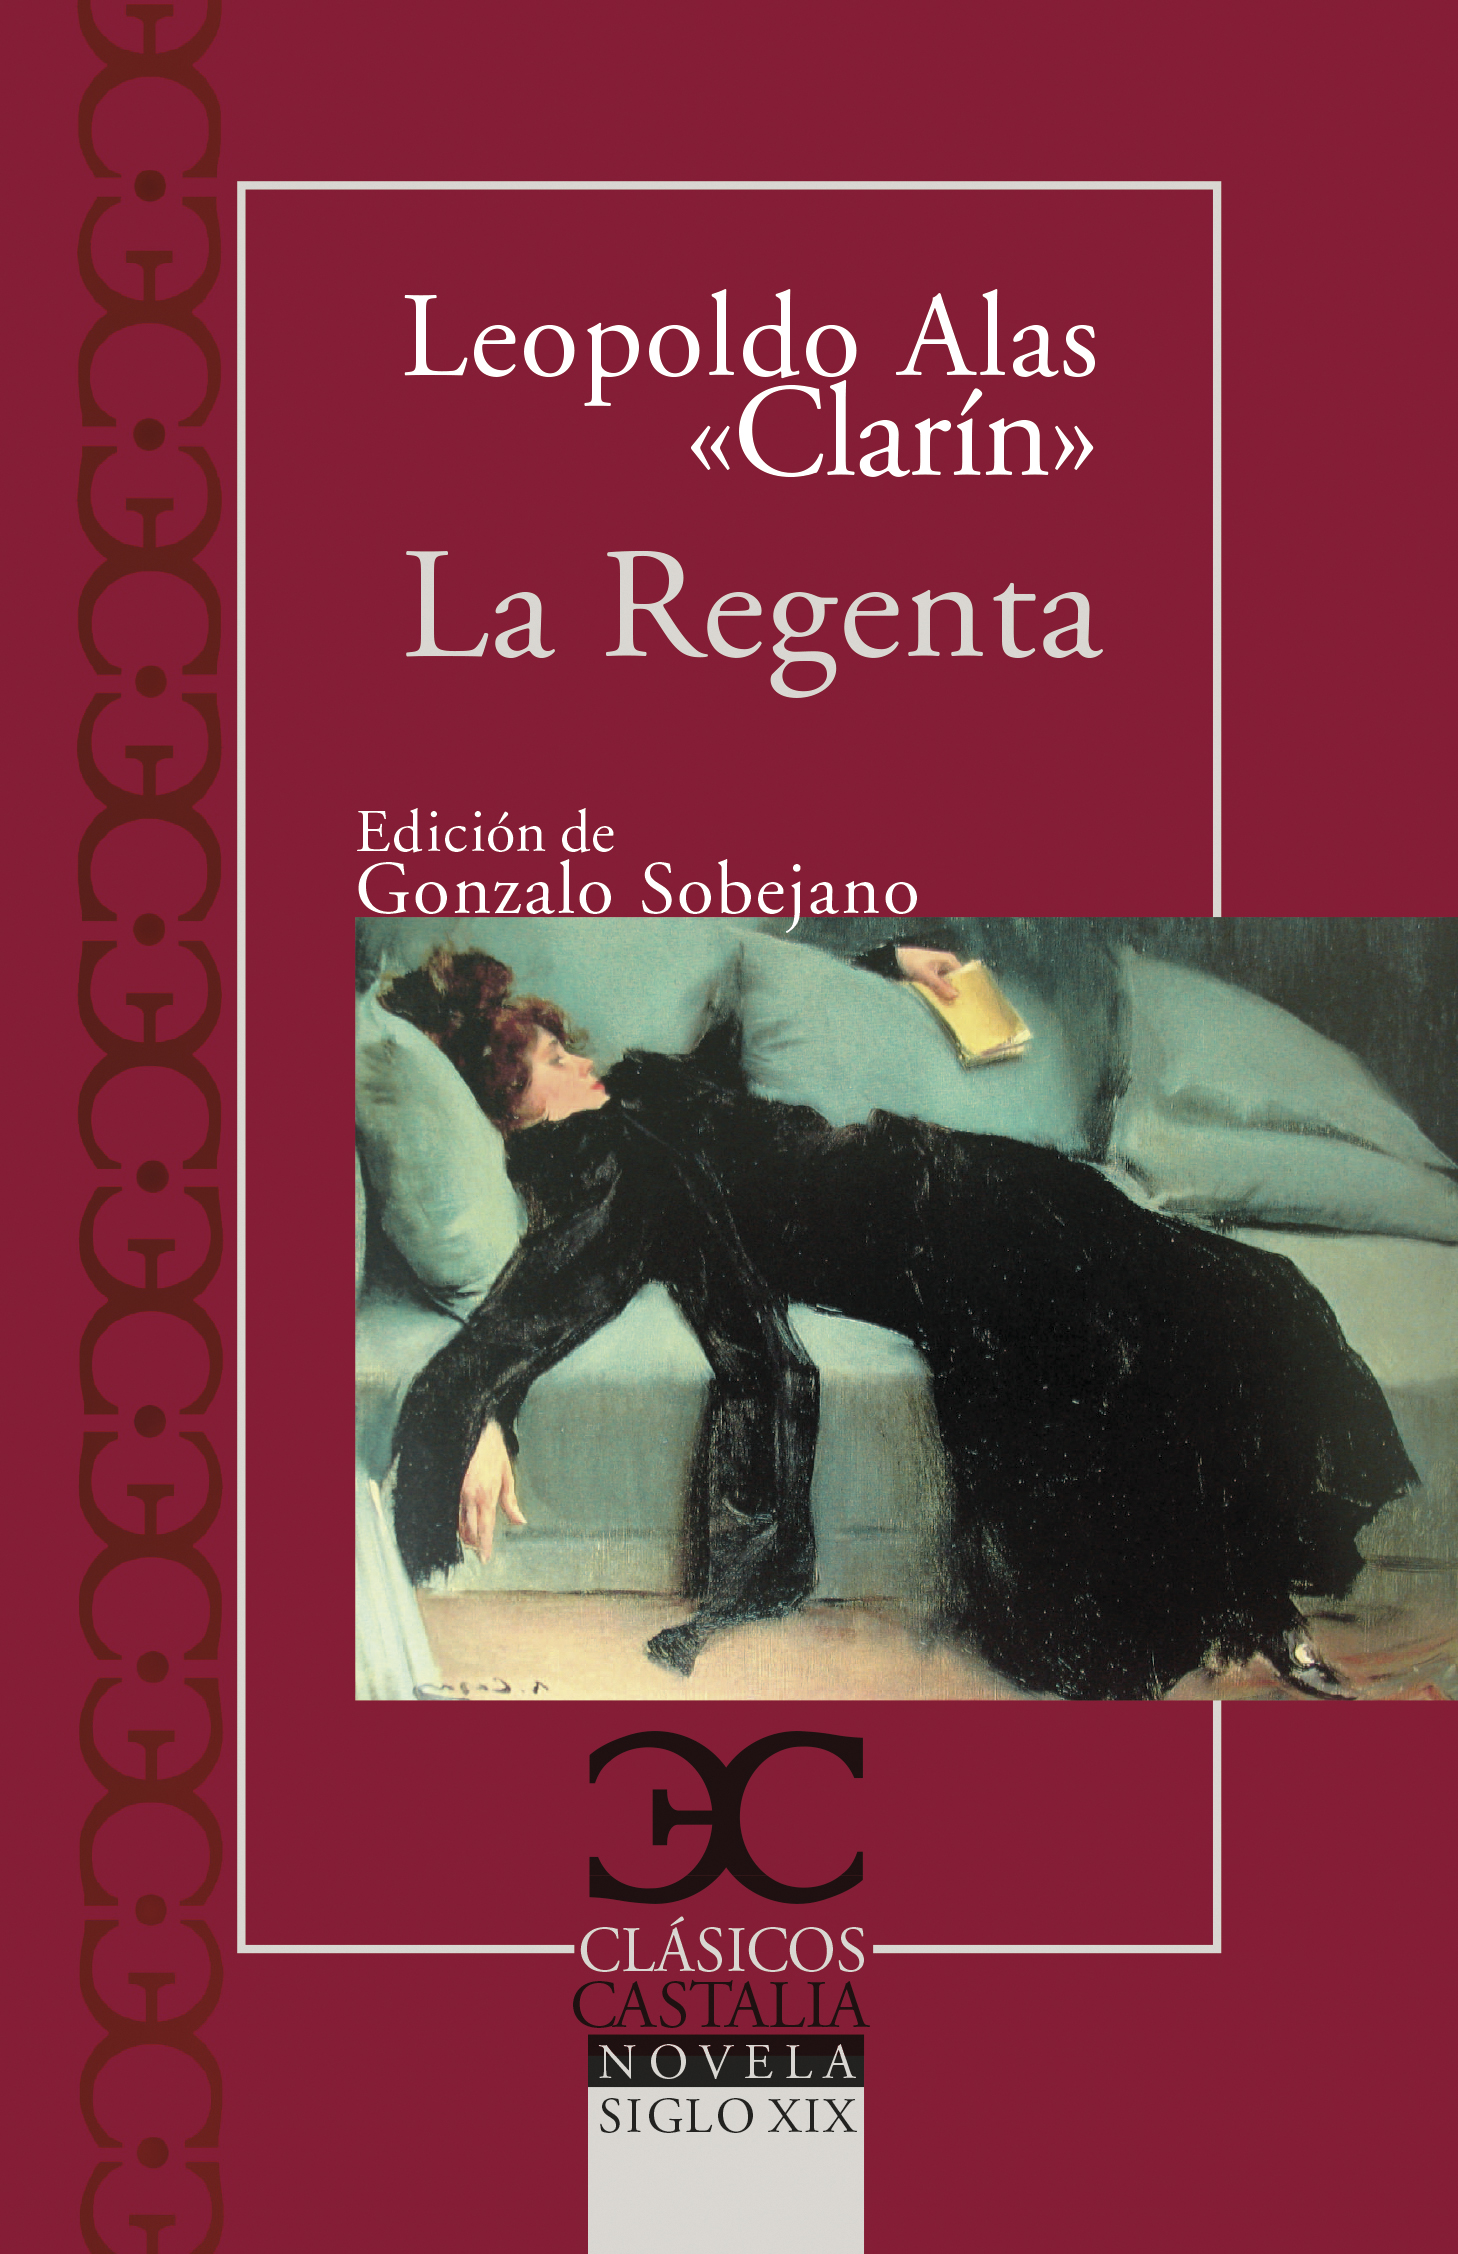 La Regenta (The Regent) by Leopoldo Alas «Clarín» (Hardcover) for